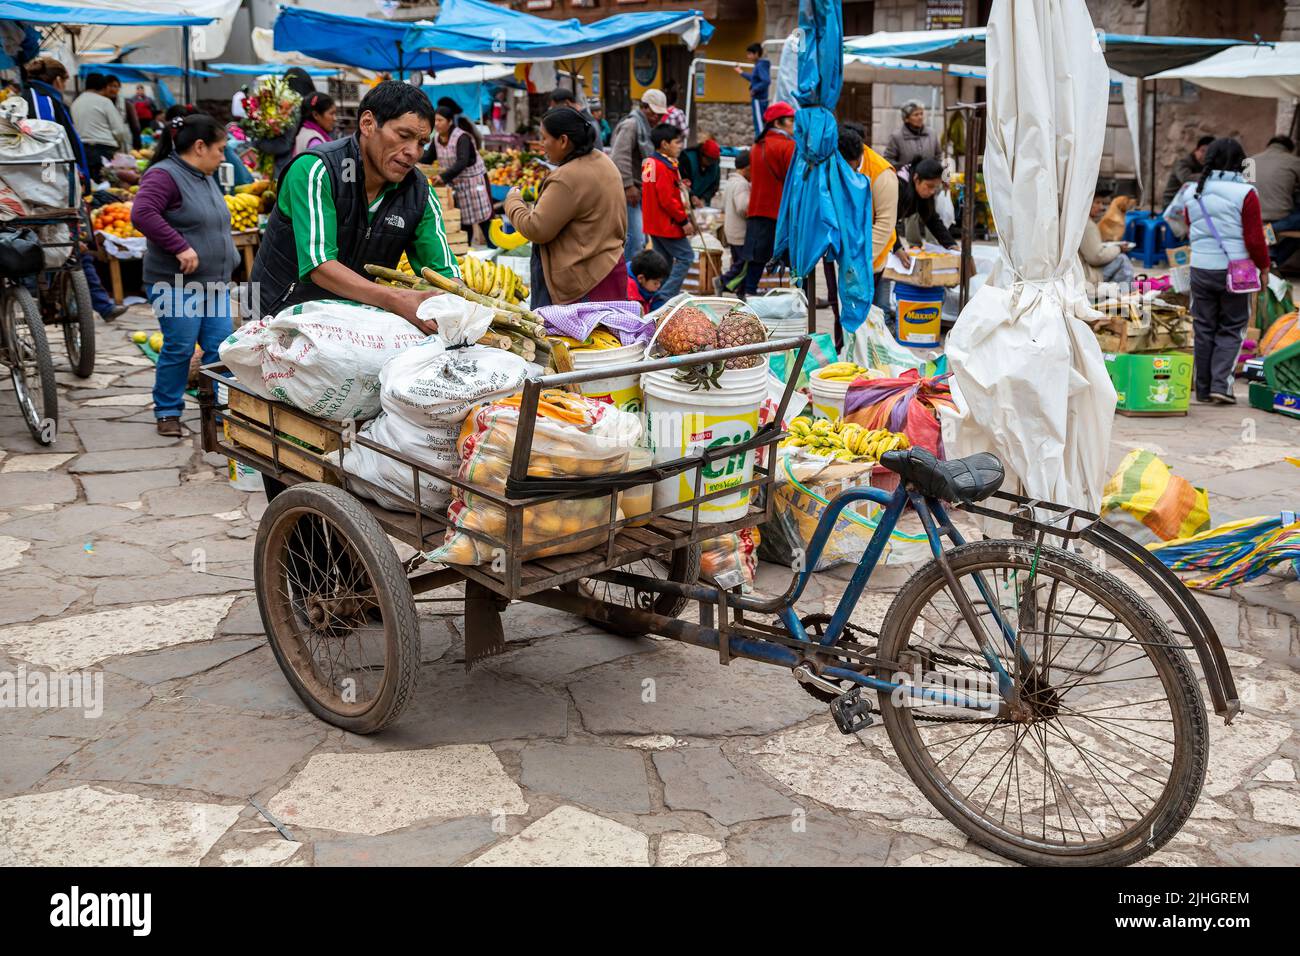 Man with produce on tricycle, Pisac Sunday Market, Cusco, Peru Stock Photo